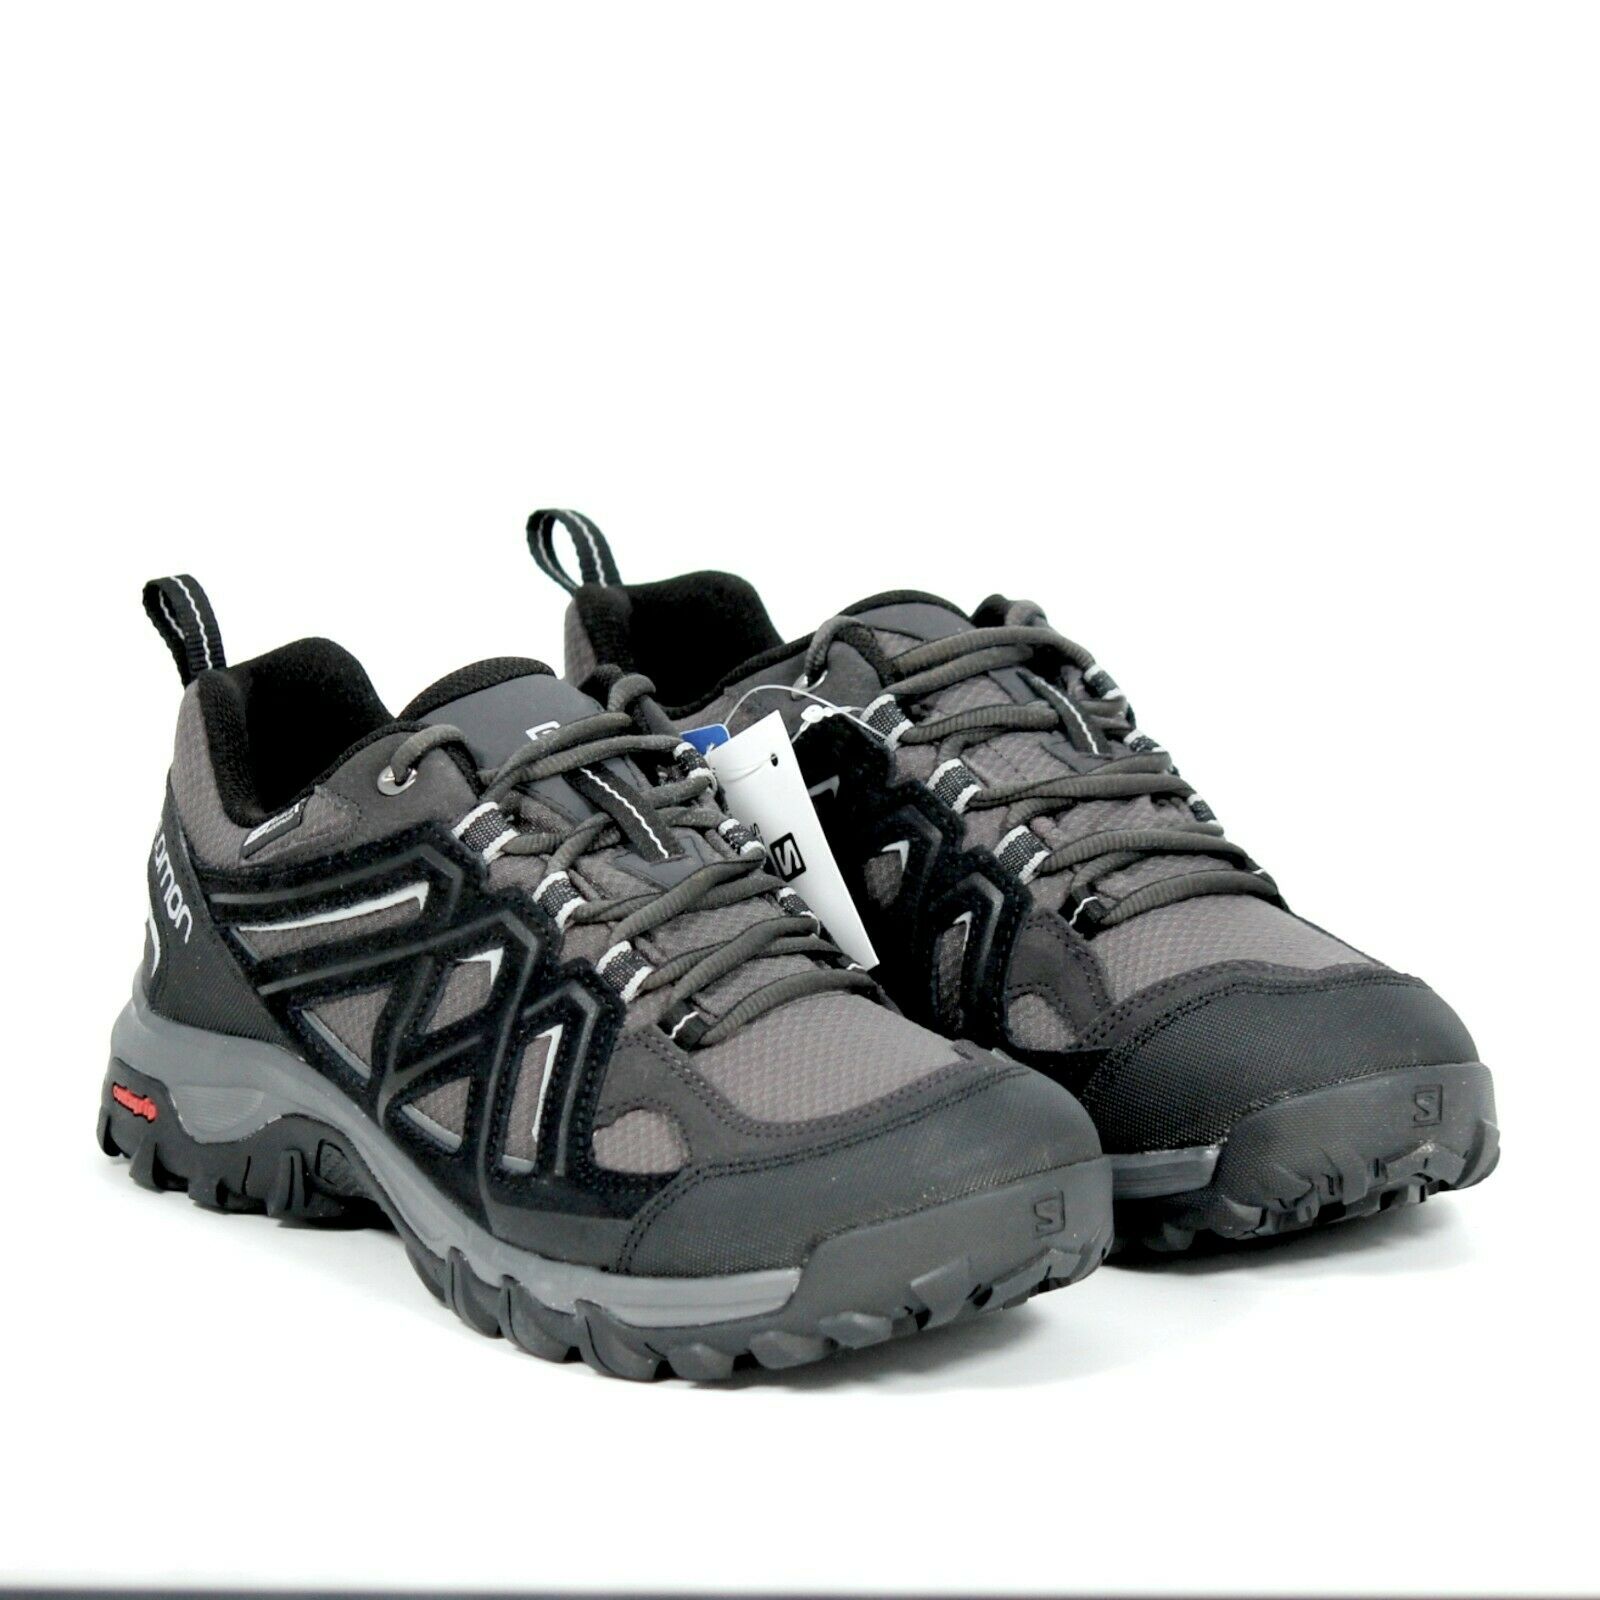 Salomon Evasion 2 CS WP Black Grey Waterproof Hiking Shoe Mens Size 8.5 New